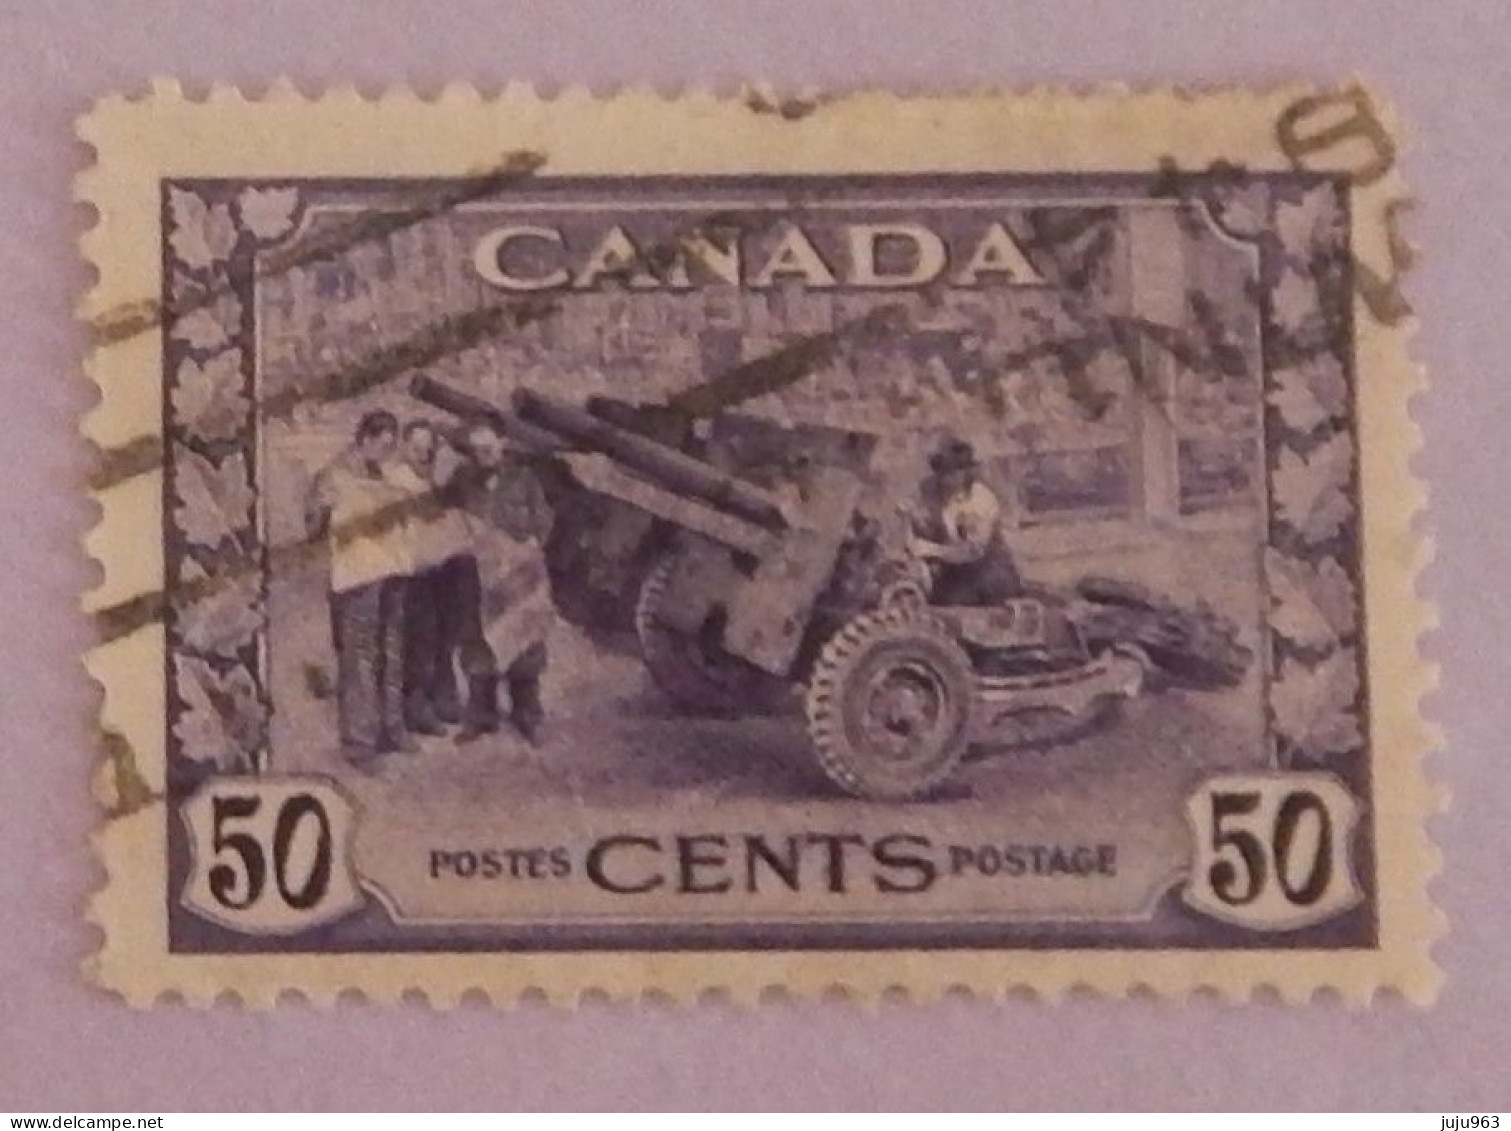 CANADA YT 217 OBLITERE "PIECE D ARTILLERIE" ANNÉES 1943/1946 - Used Stamps